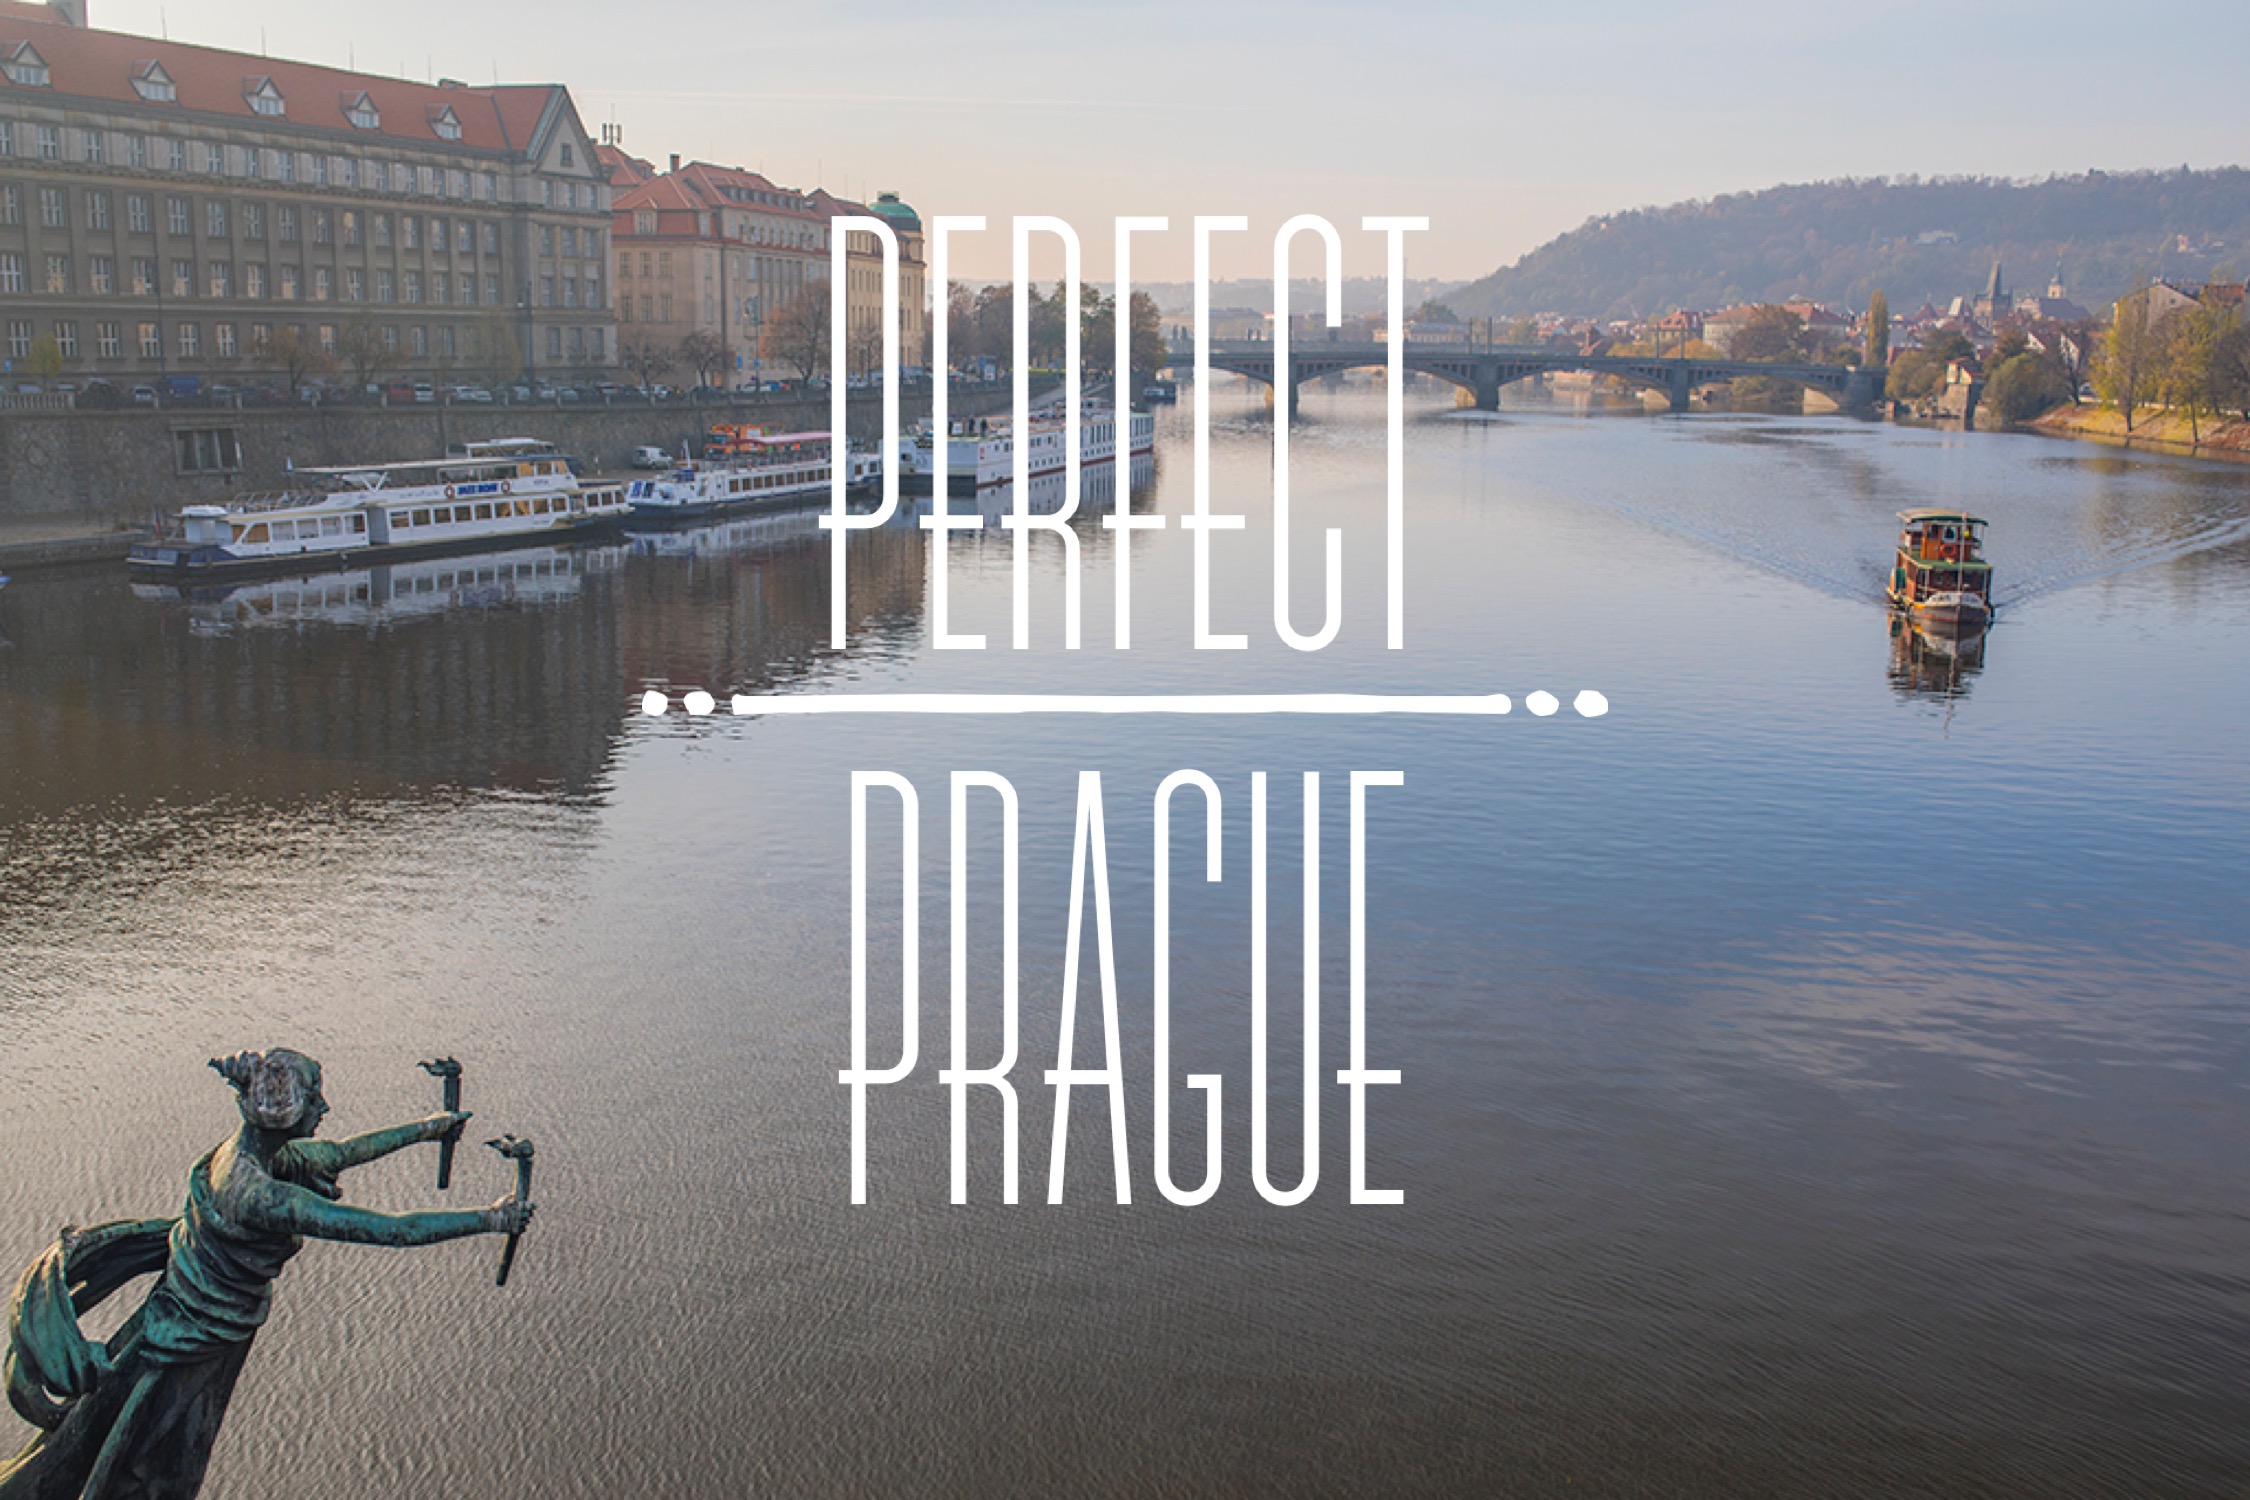 Trafalgar Imperial Travel - Perfect Prague